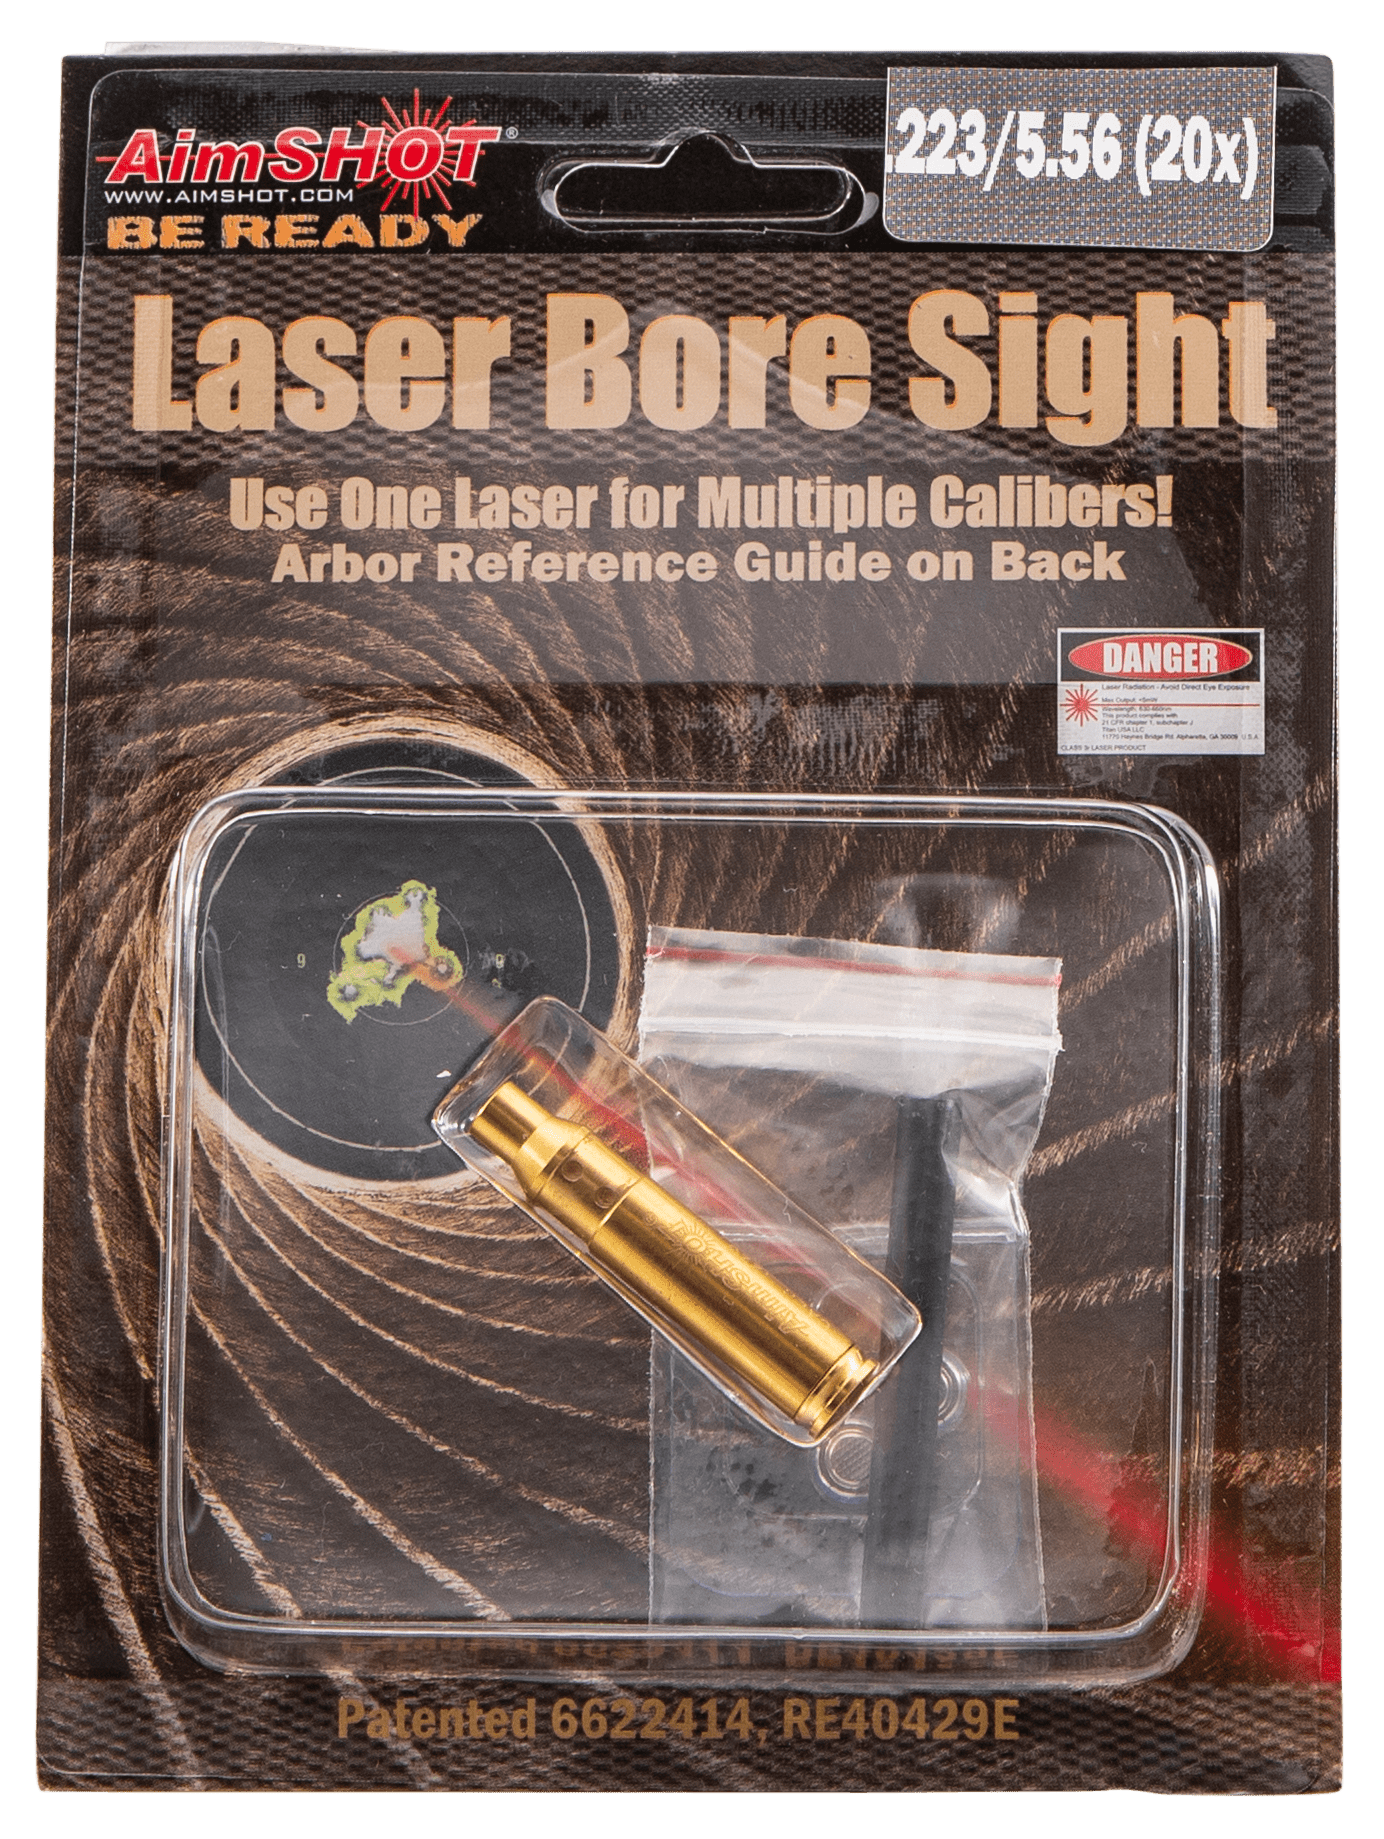 Aimshot Aimshot Laser Boresighter, Aims Bs22320x      223  Lsr Boresight 20x Shooting